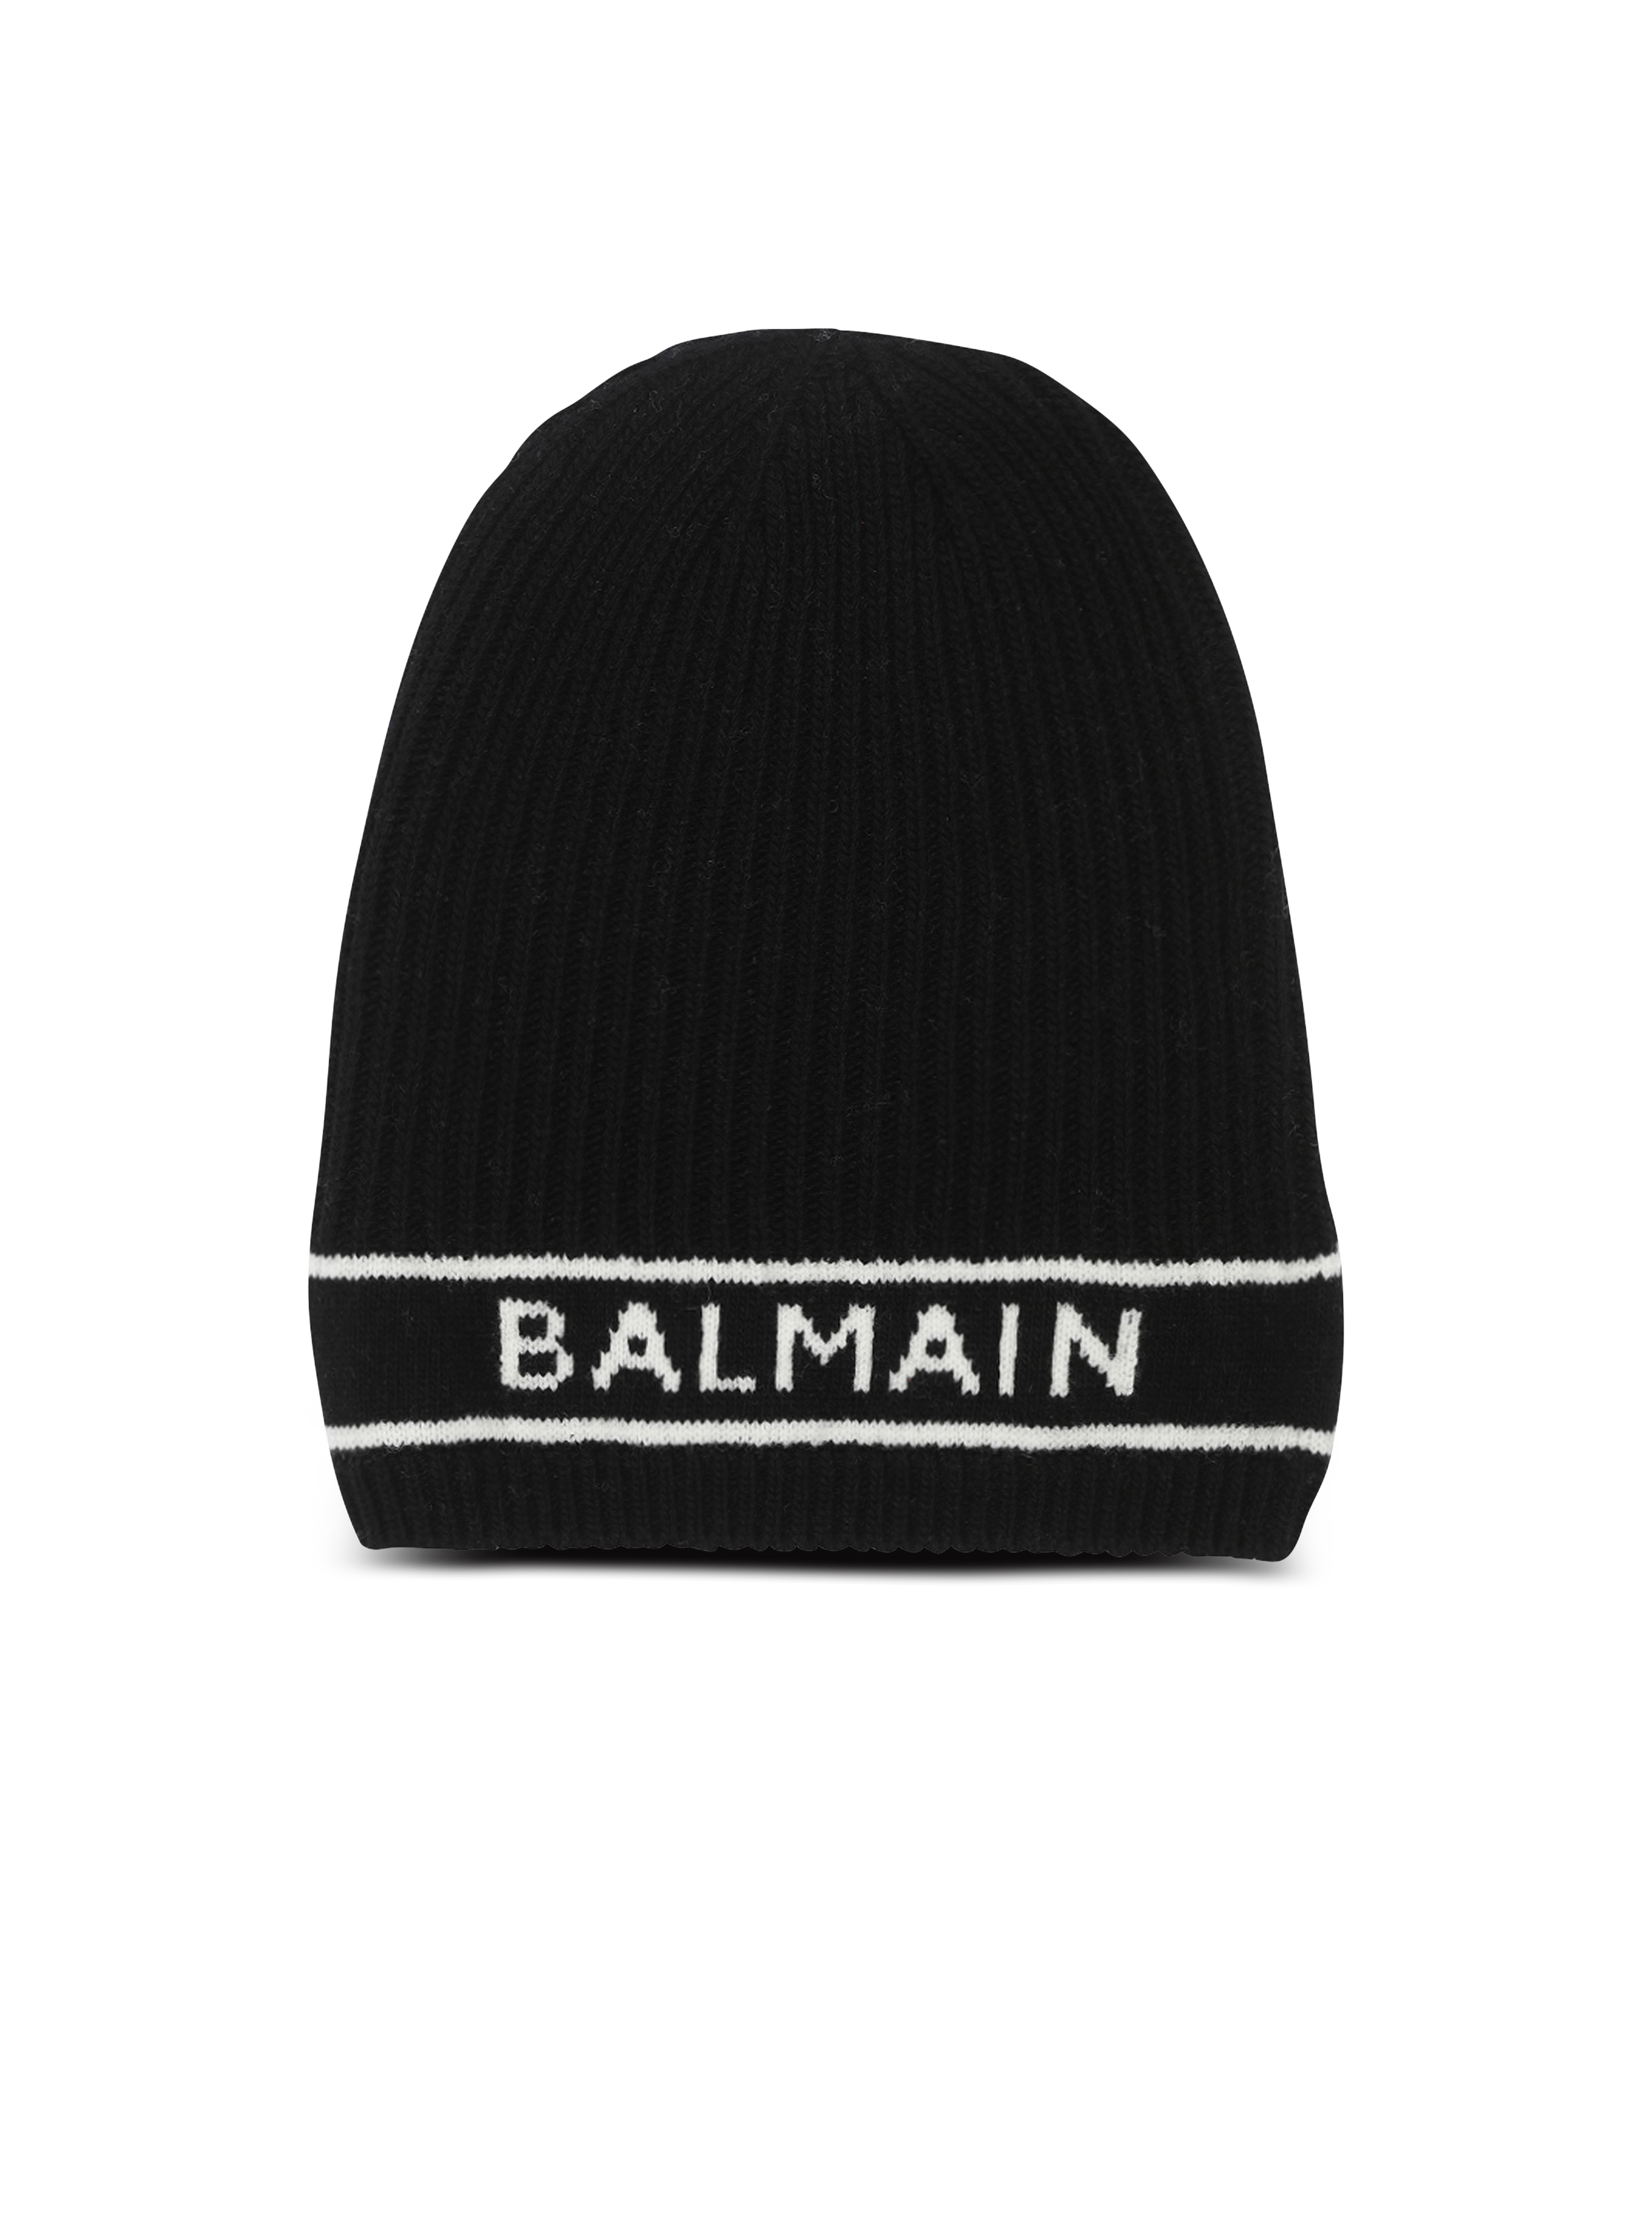 Balmain巴尔曼标志刺绣羊毛便帽, black